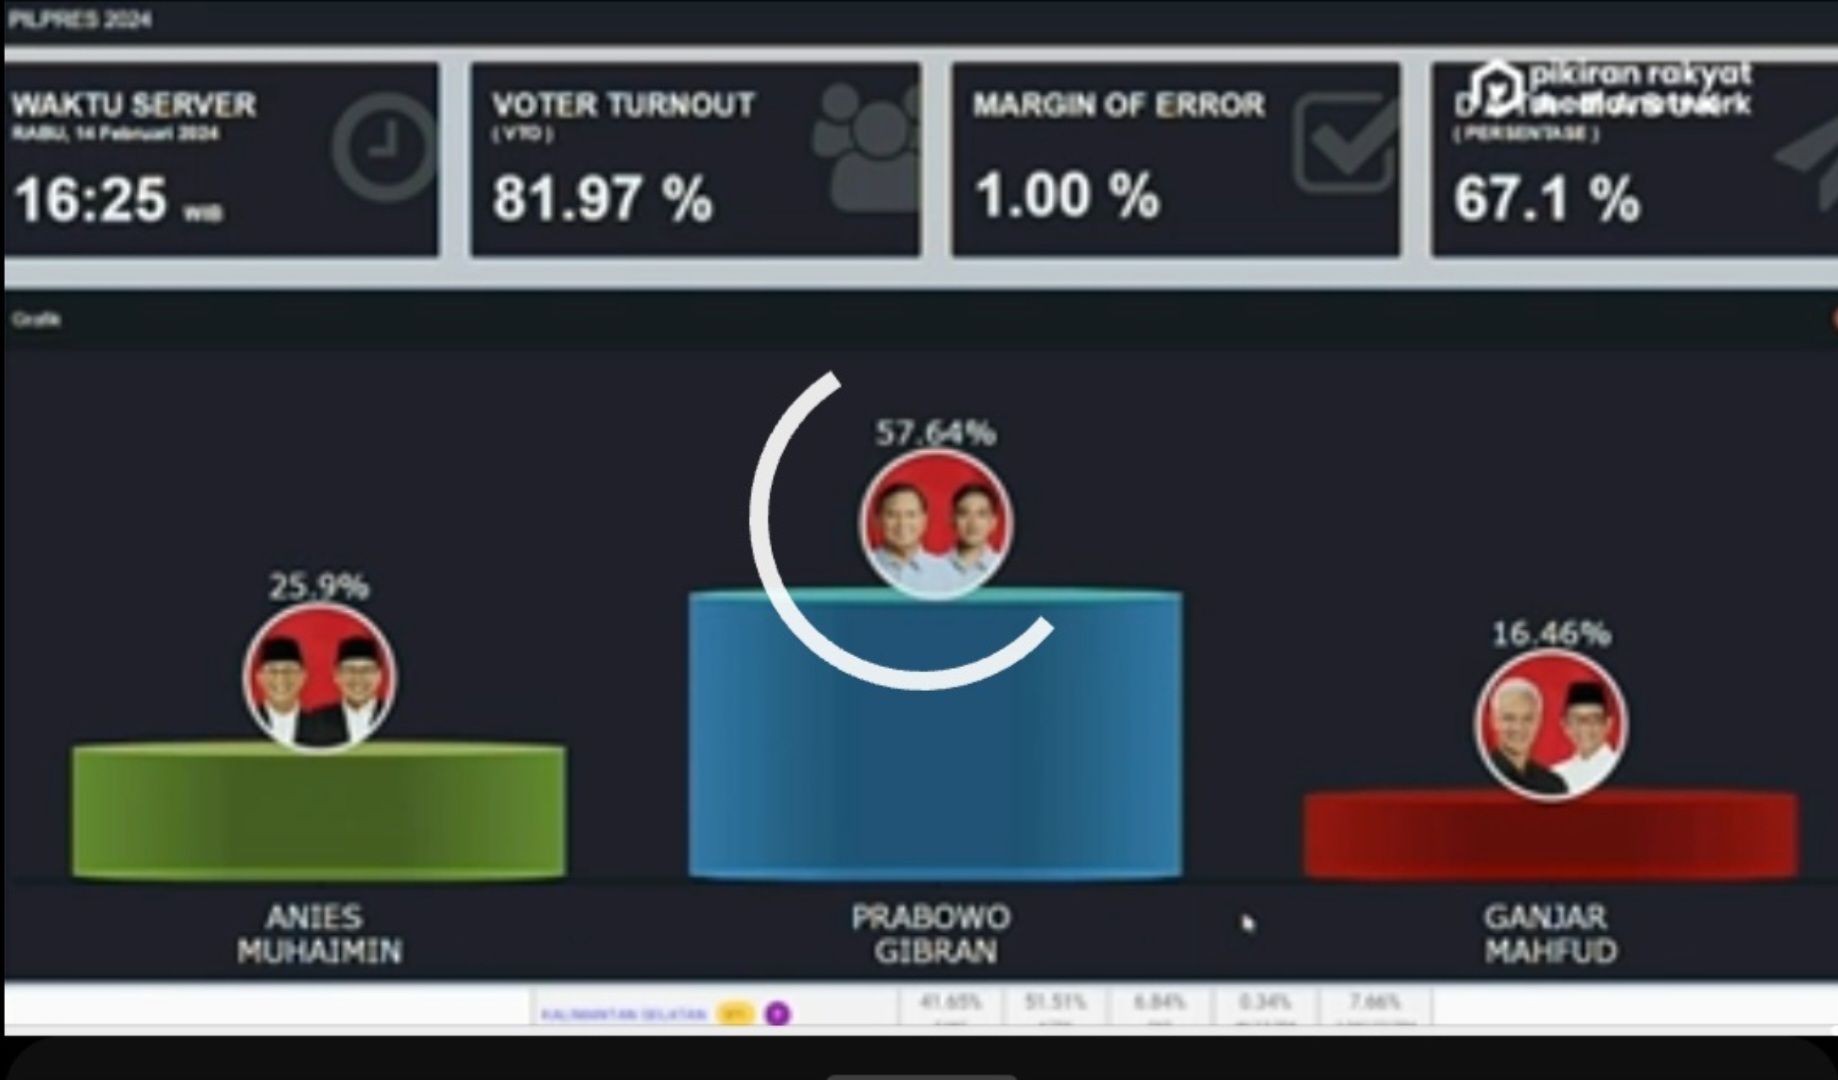 Hasil Quick Count Pilpres 2024 menempatkan Prabowo Gibran posisi 50 persen hingga Rabu sore. *